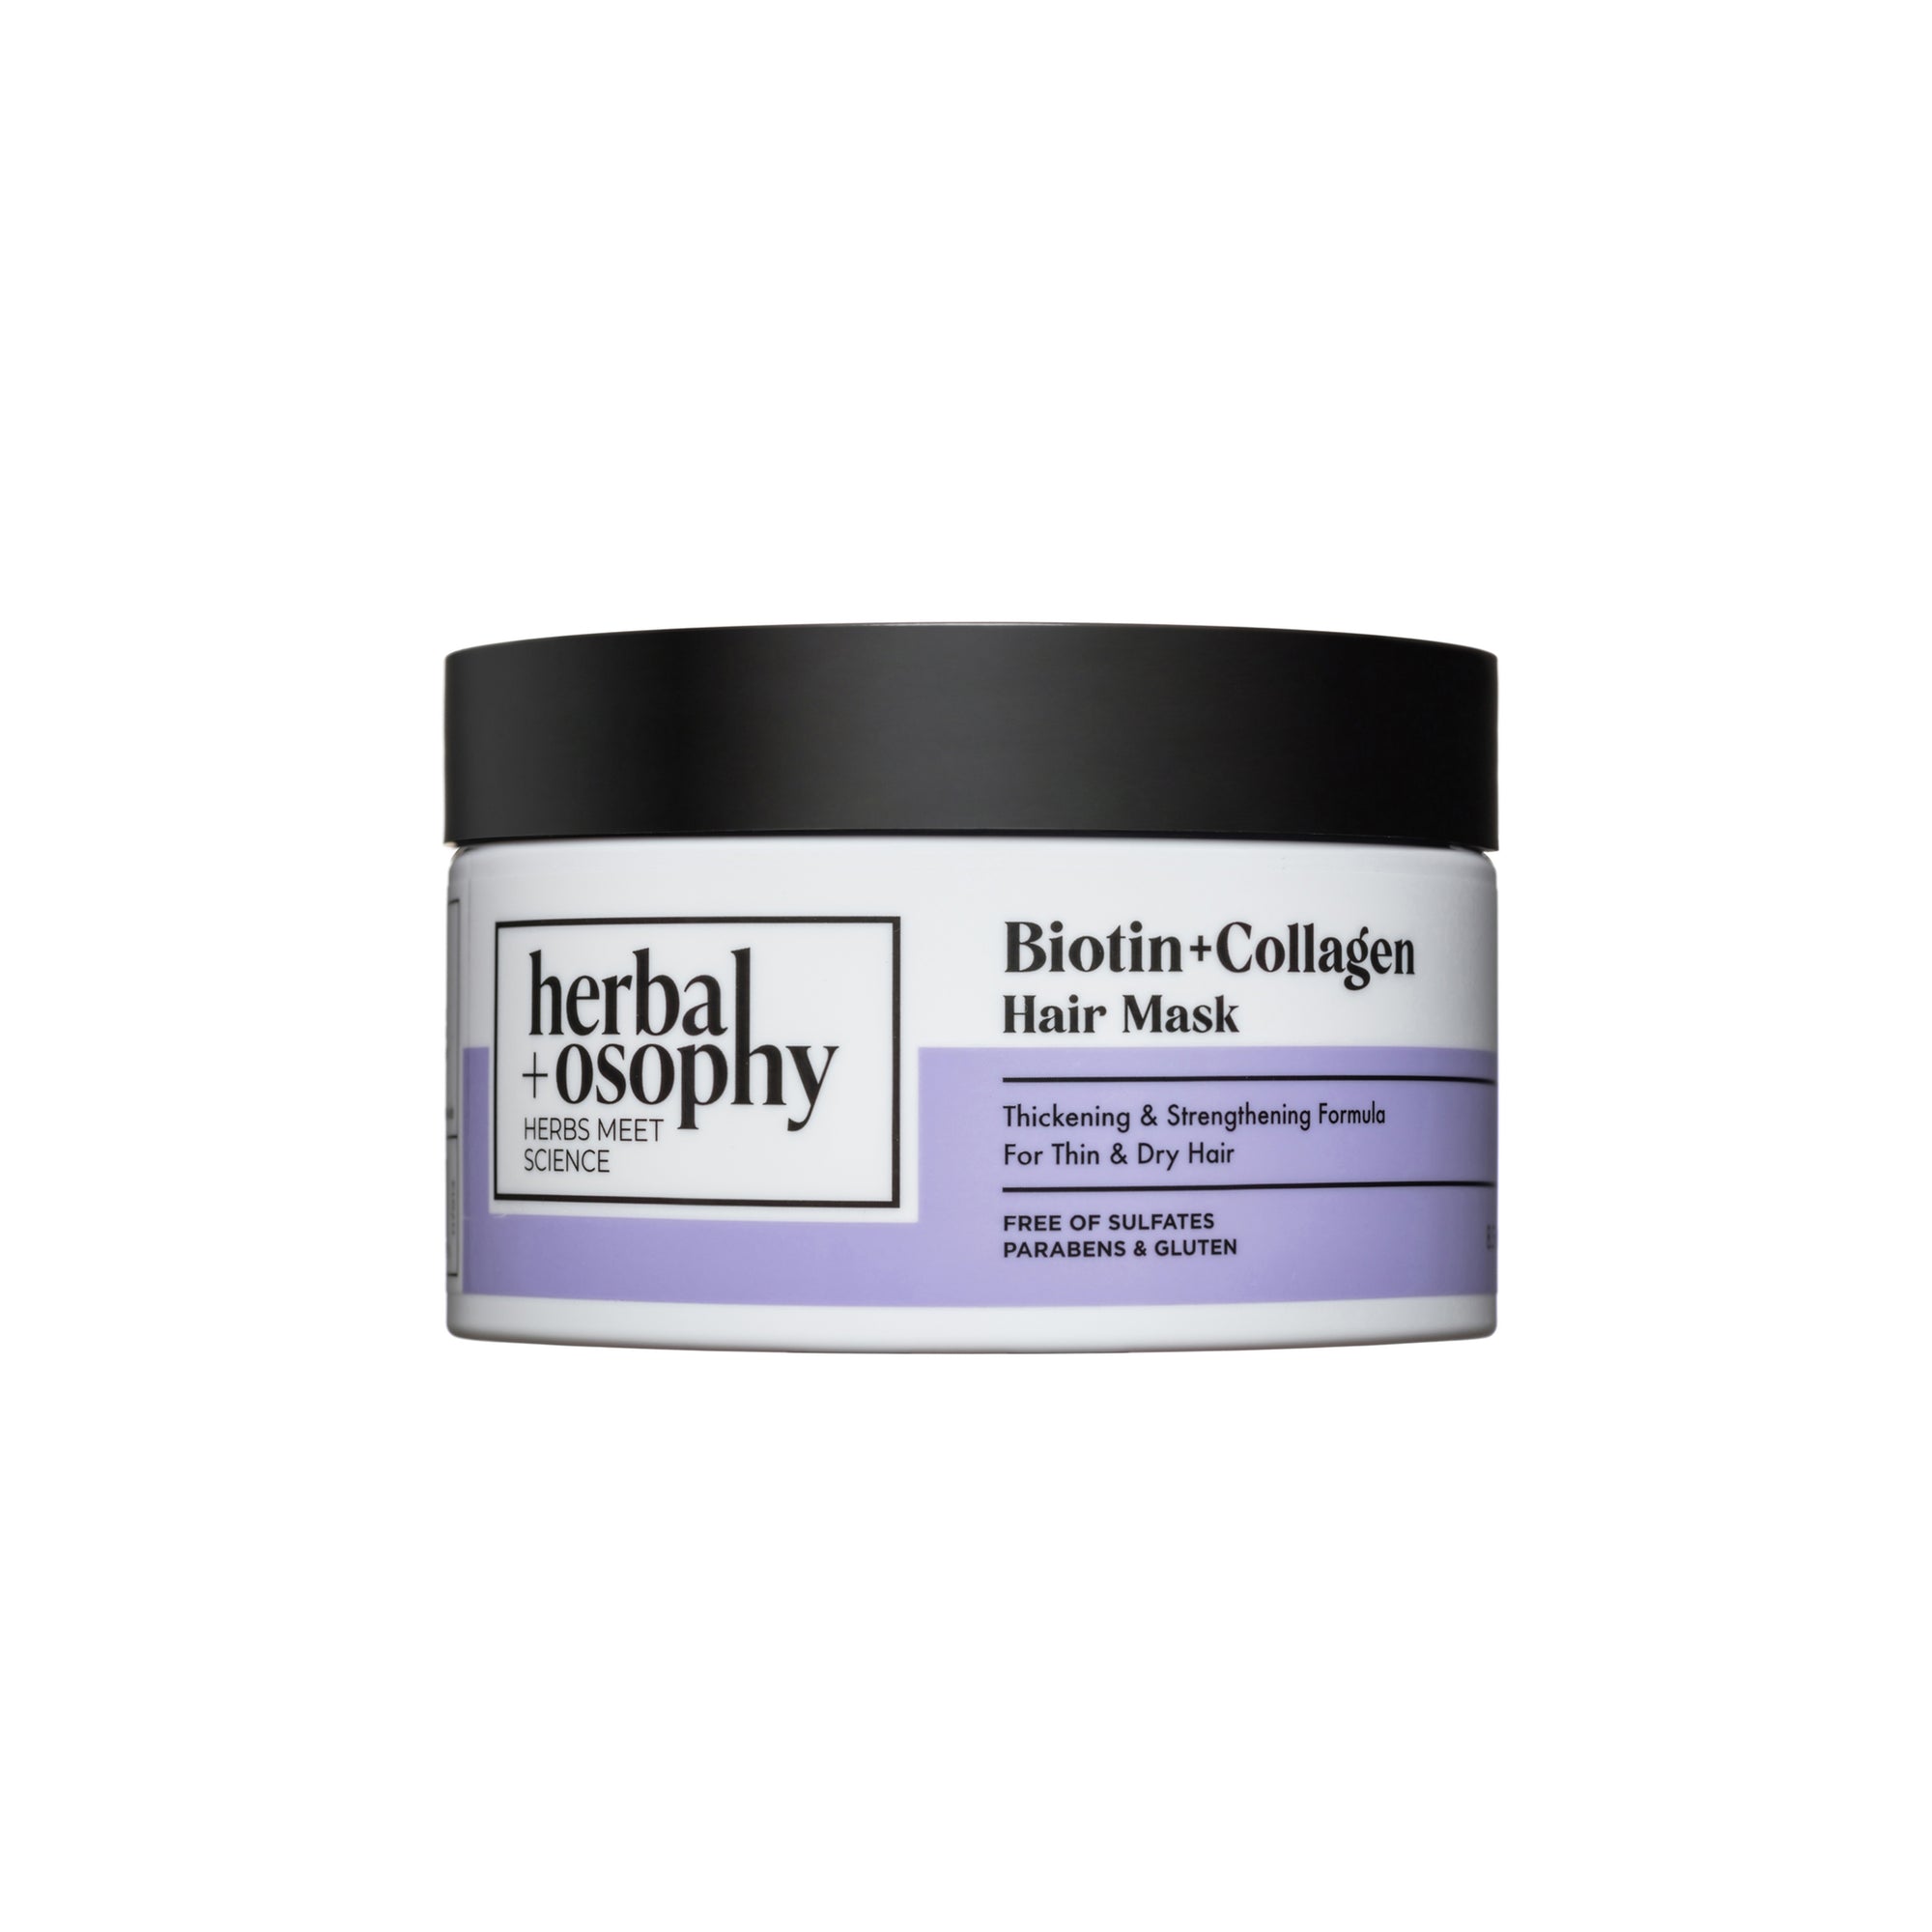 Biotin + Collagen Hair Mask jar front